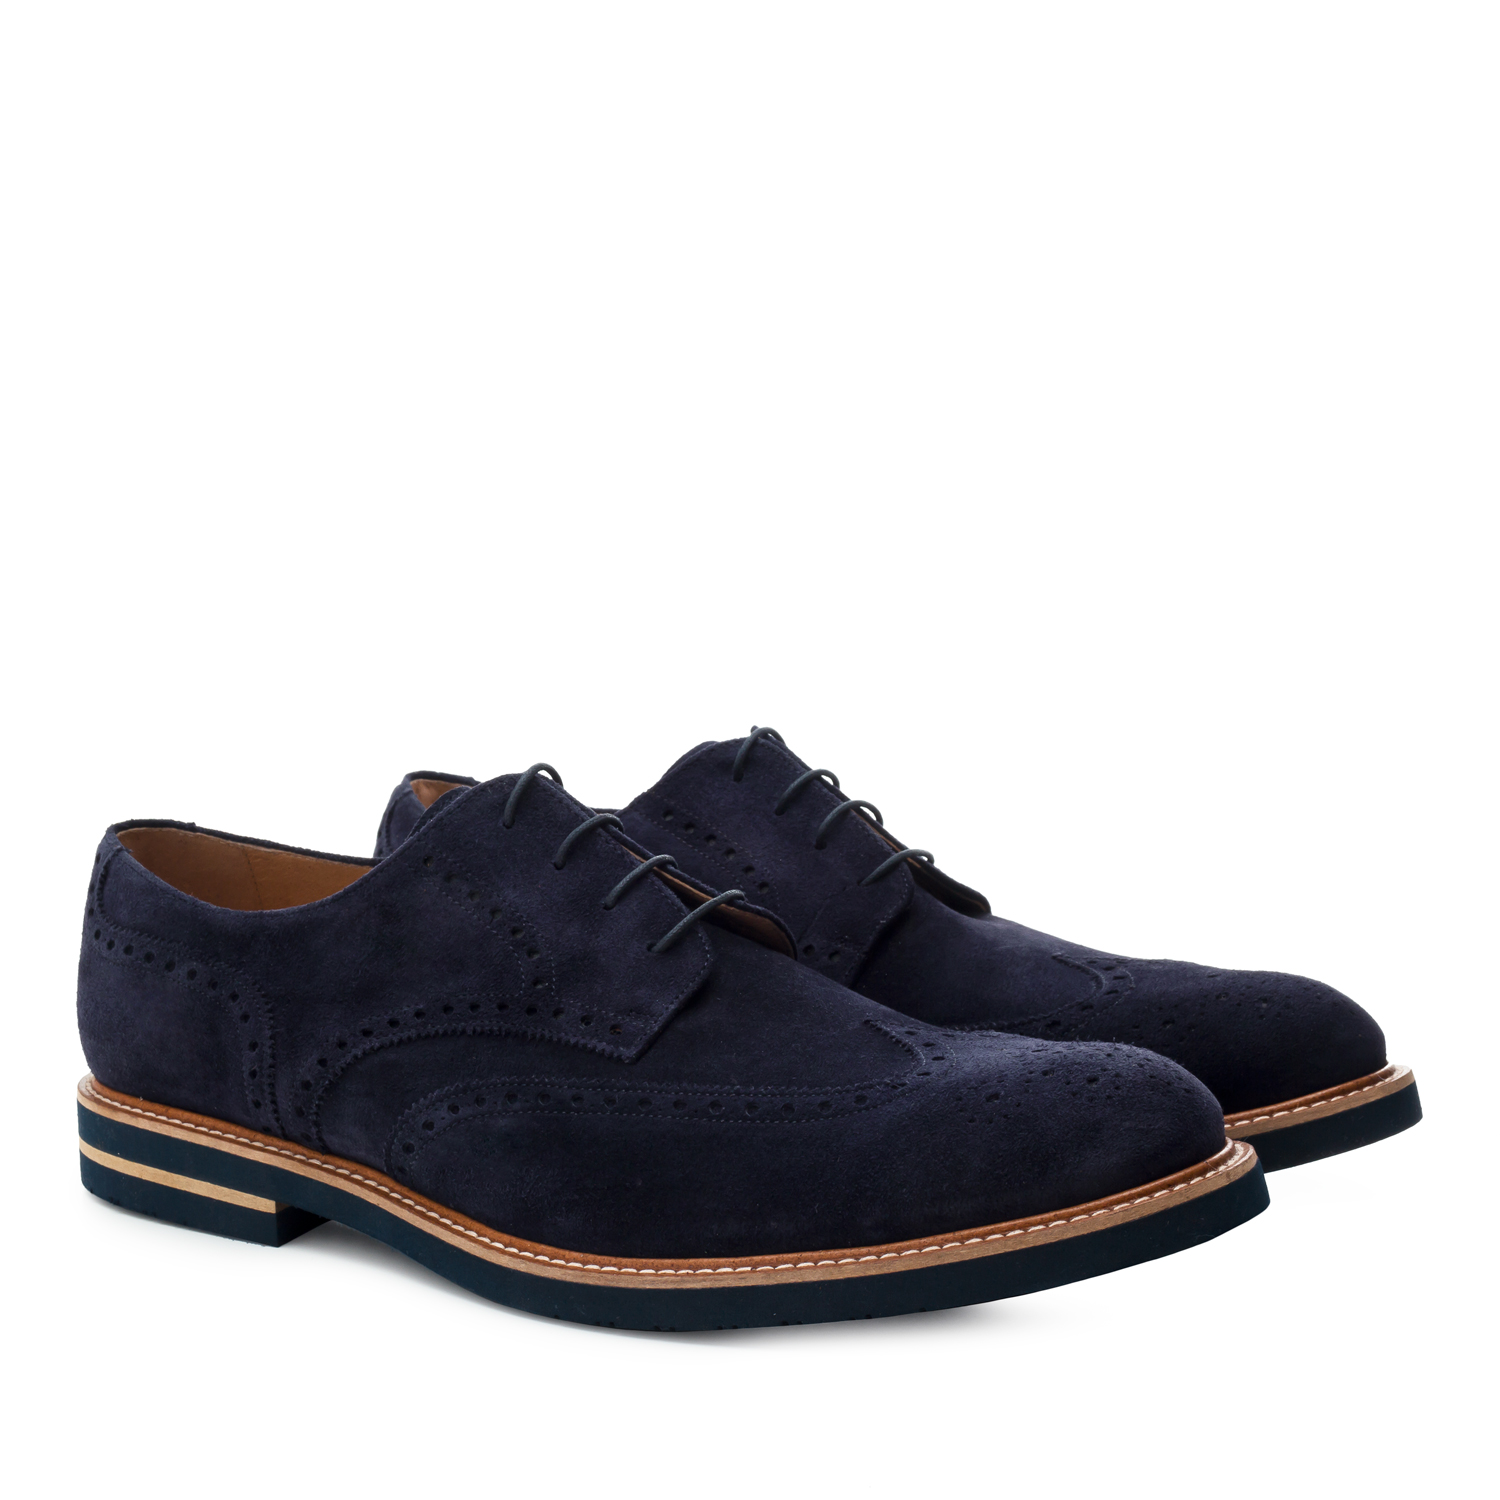 Schuhe im Oxford-Stil Rauleder Blau - MADE IN SPAIN - 